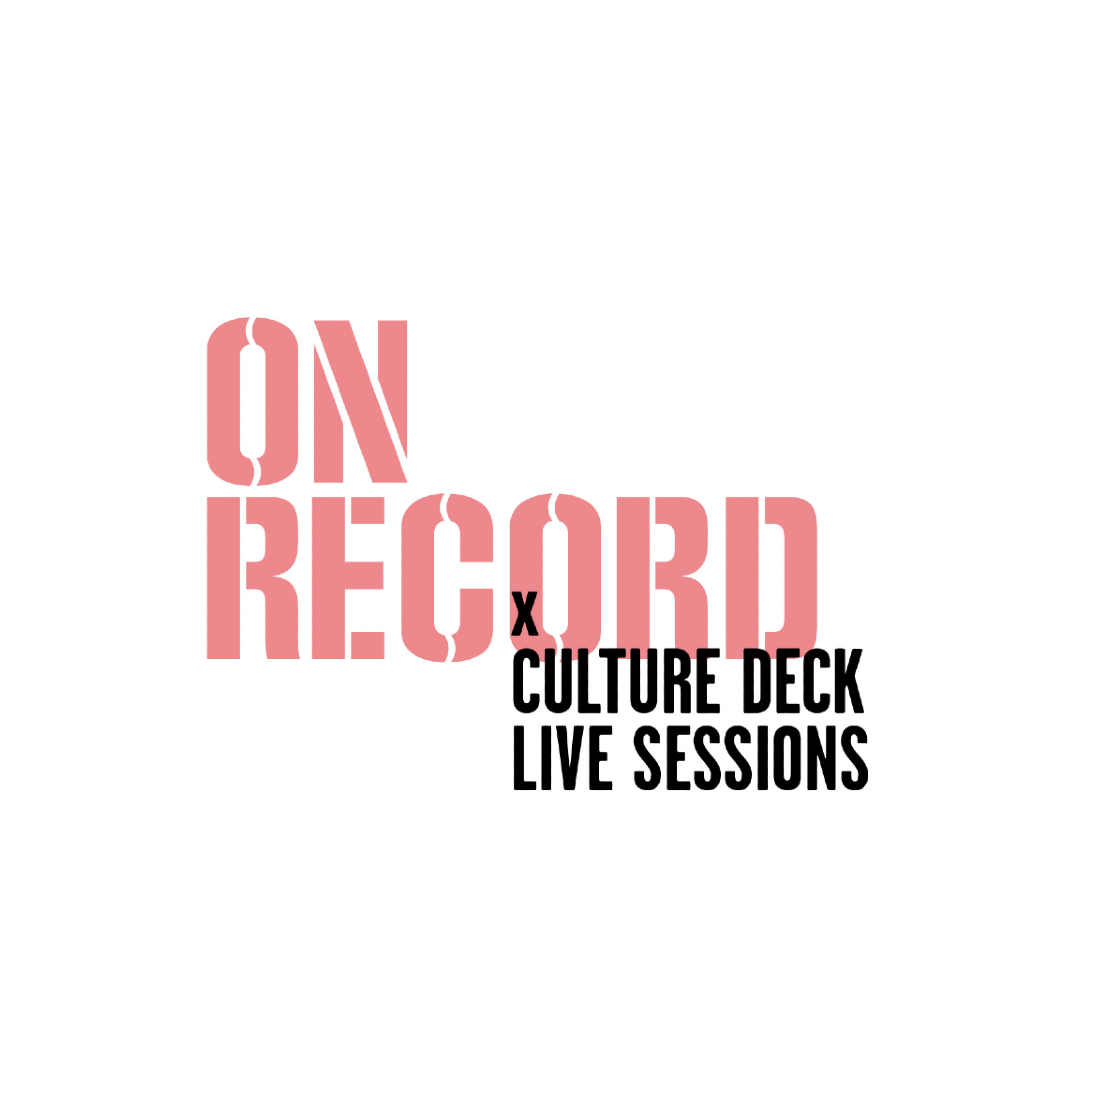 Culture Deck Live Sessions